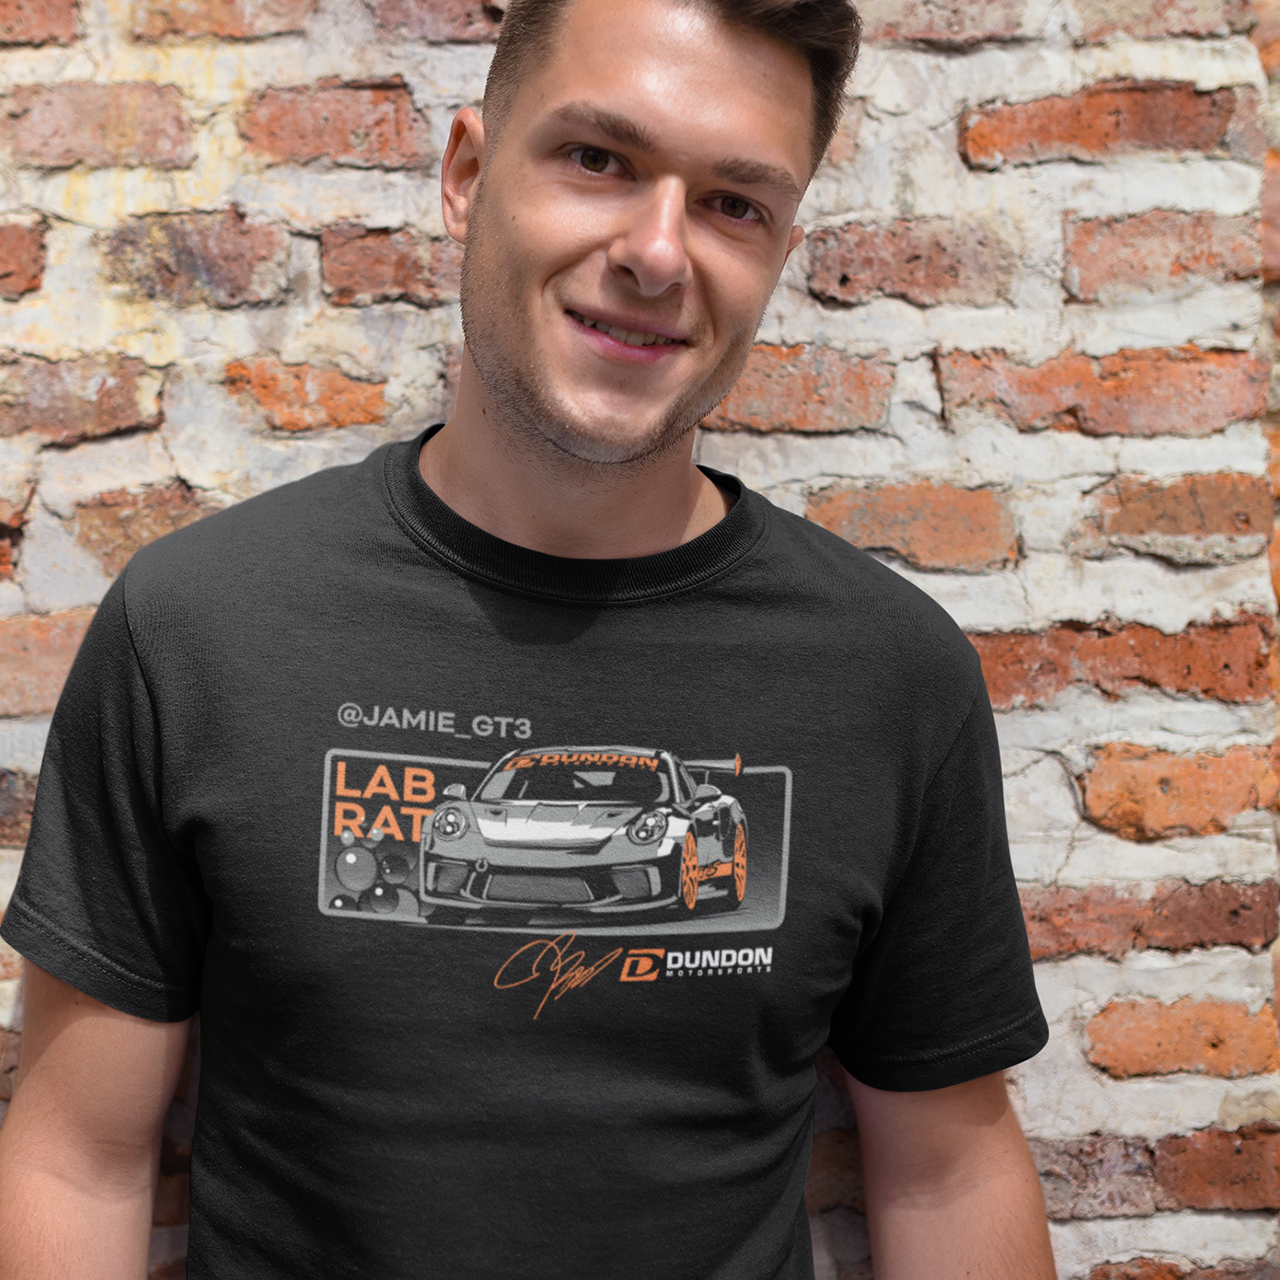 Lab Rat - Dundon Motorsports Signature Series T-shirt